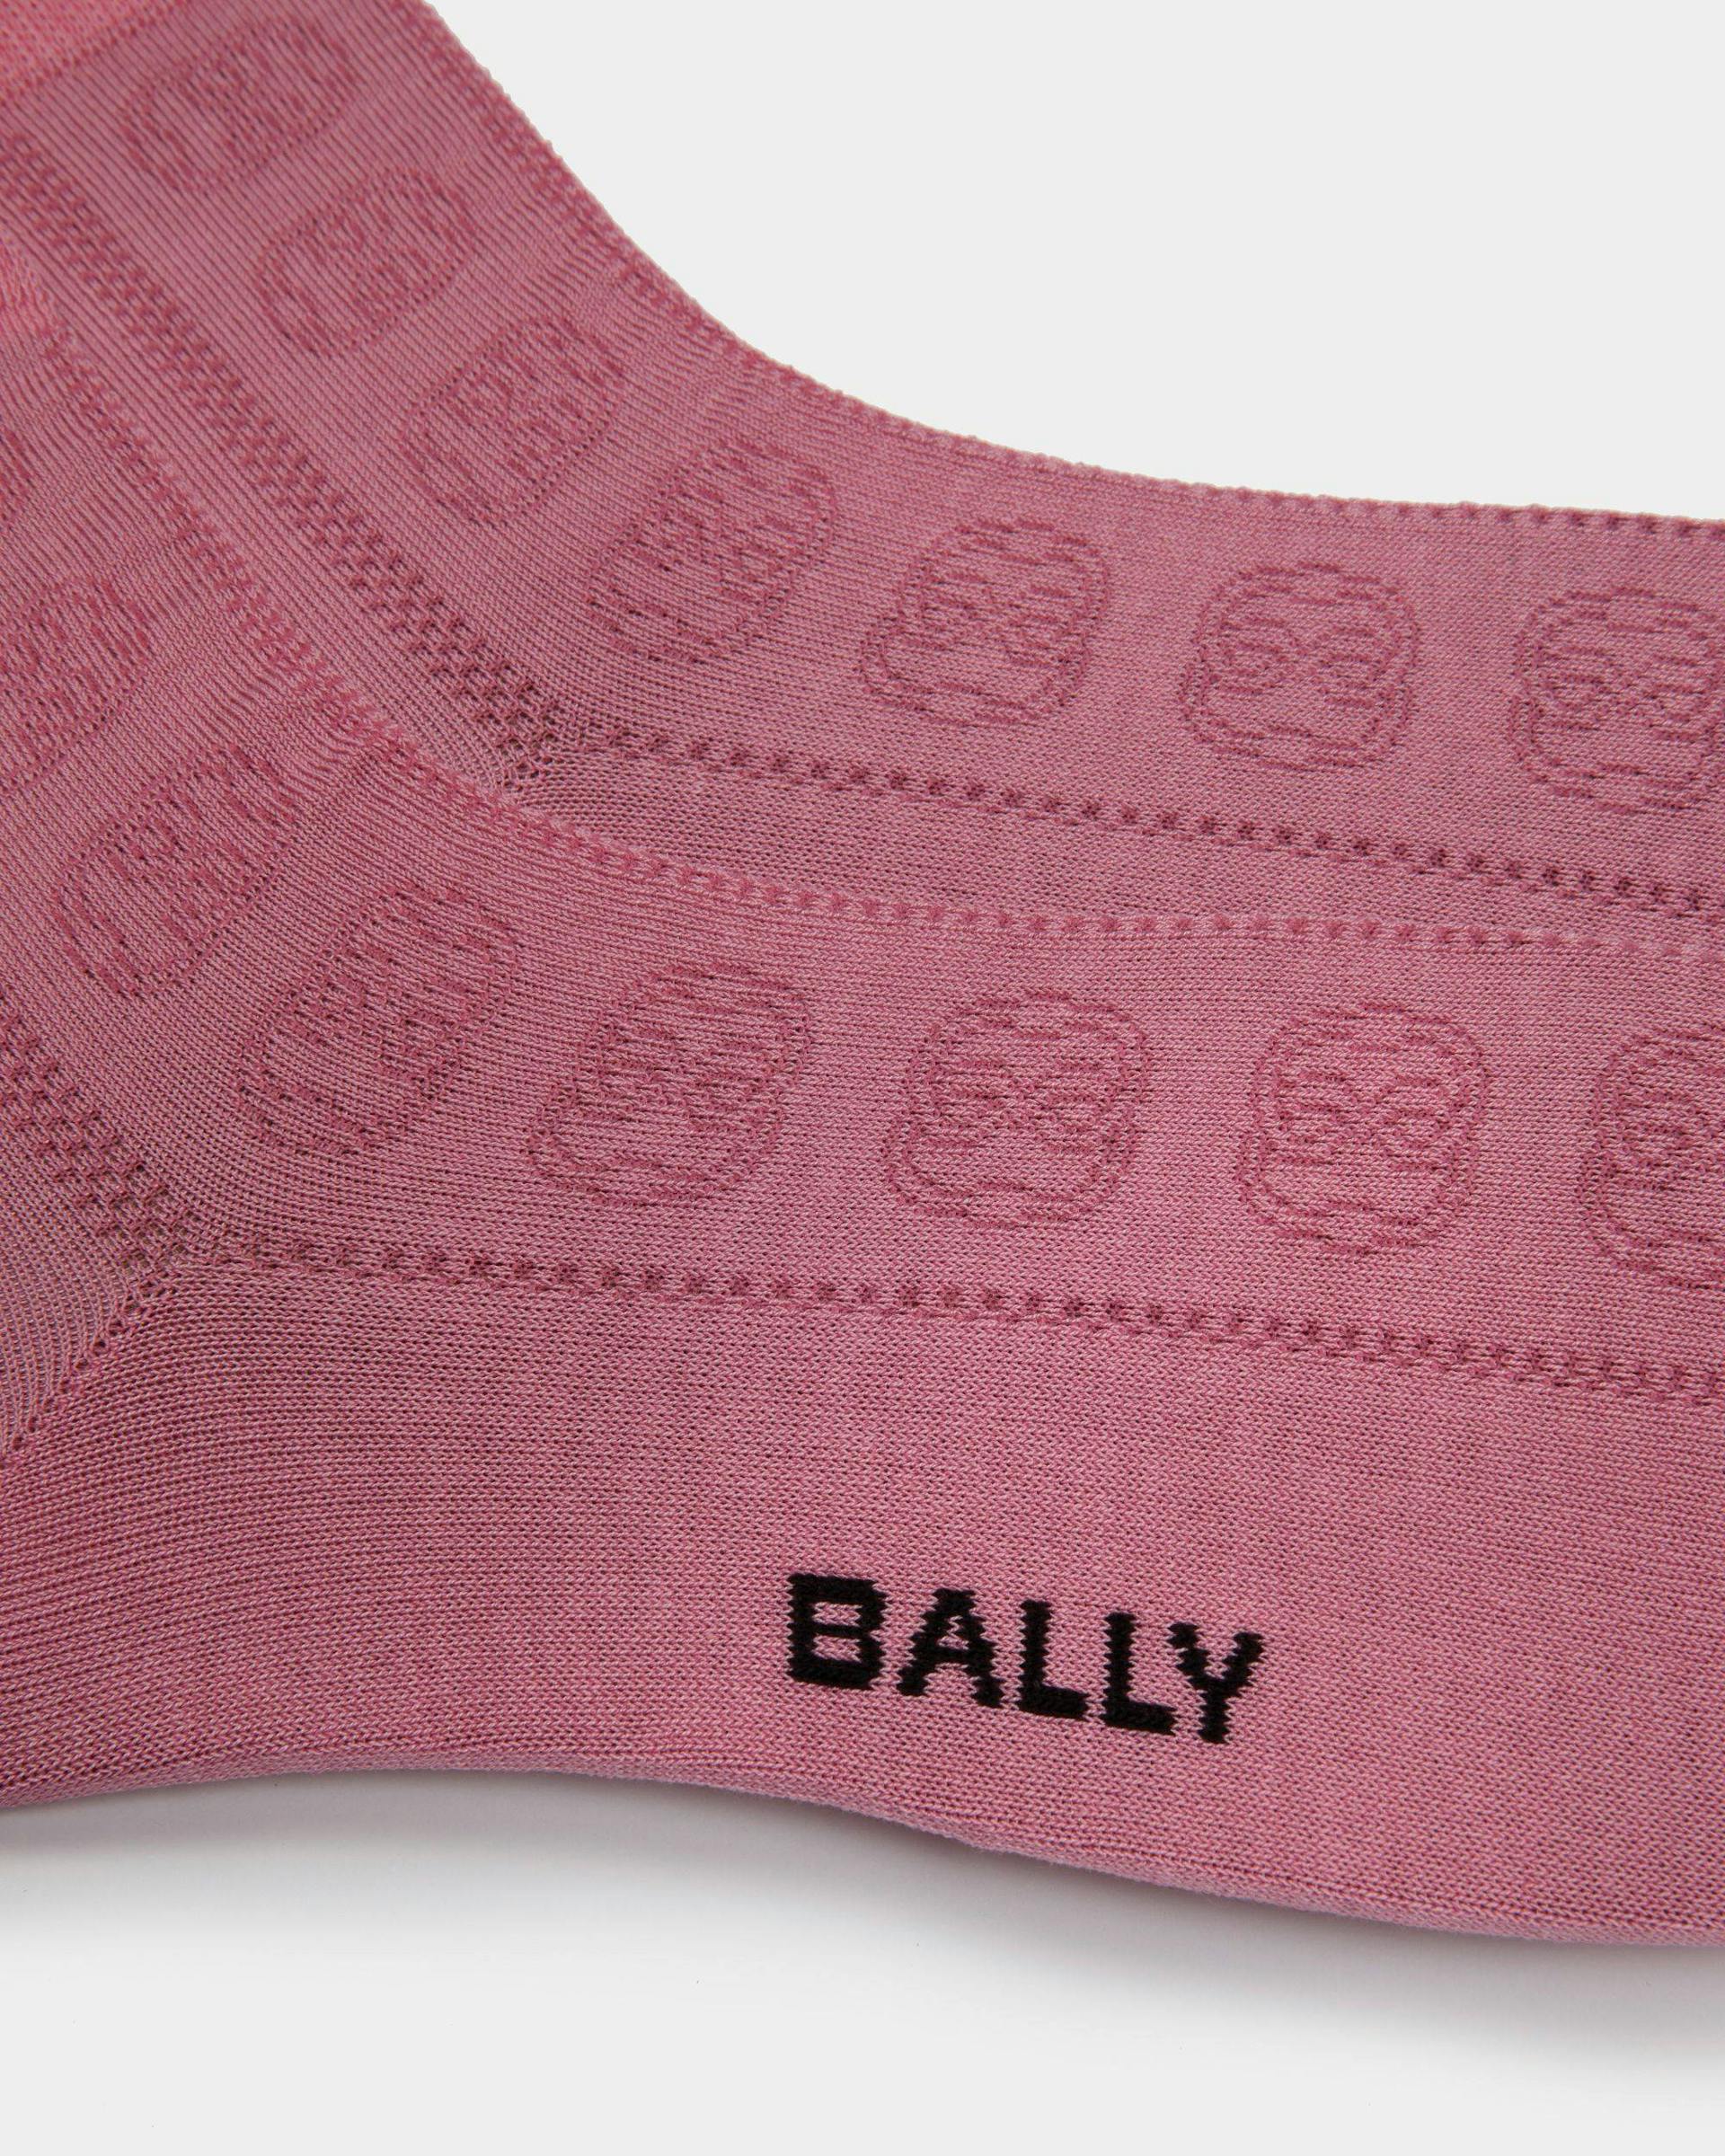 Women's Logo Socks In Pink Cotton | Bally | Still Life Detail